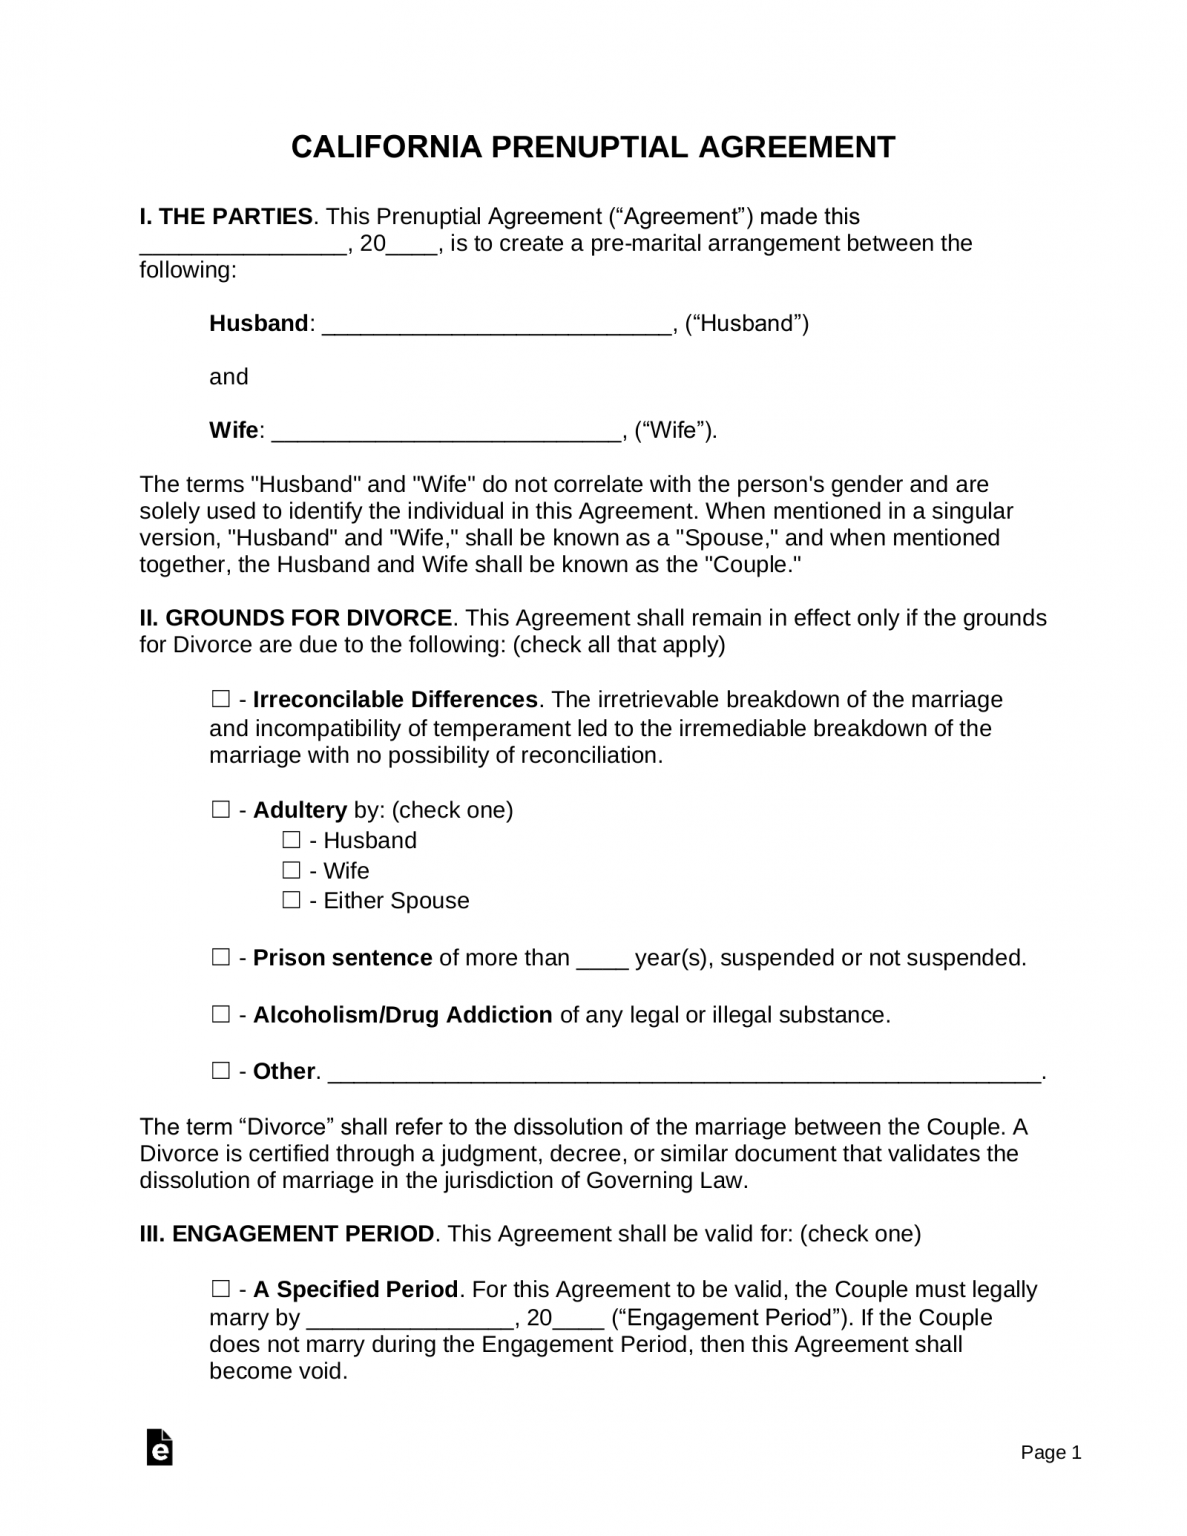 free-california-prenuptial-agreement-template-pdf-word-eforms